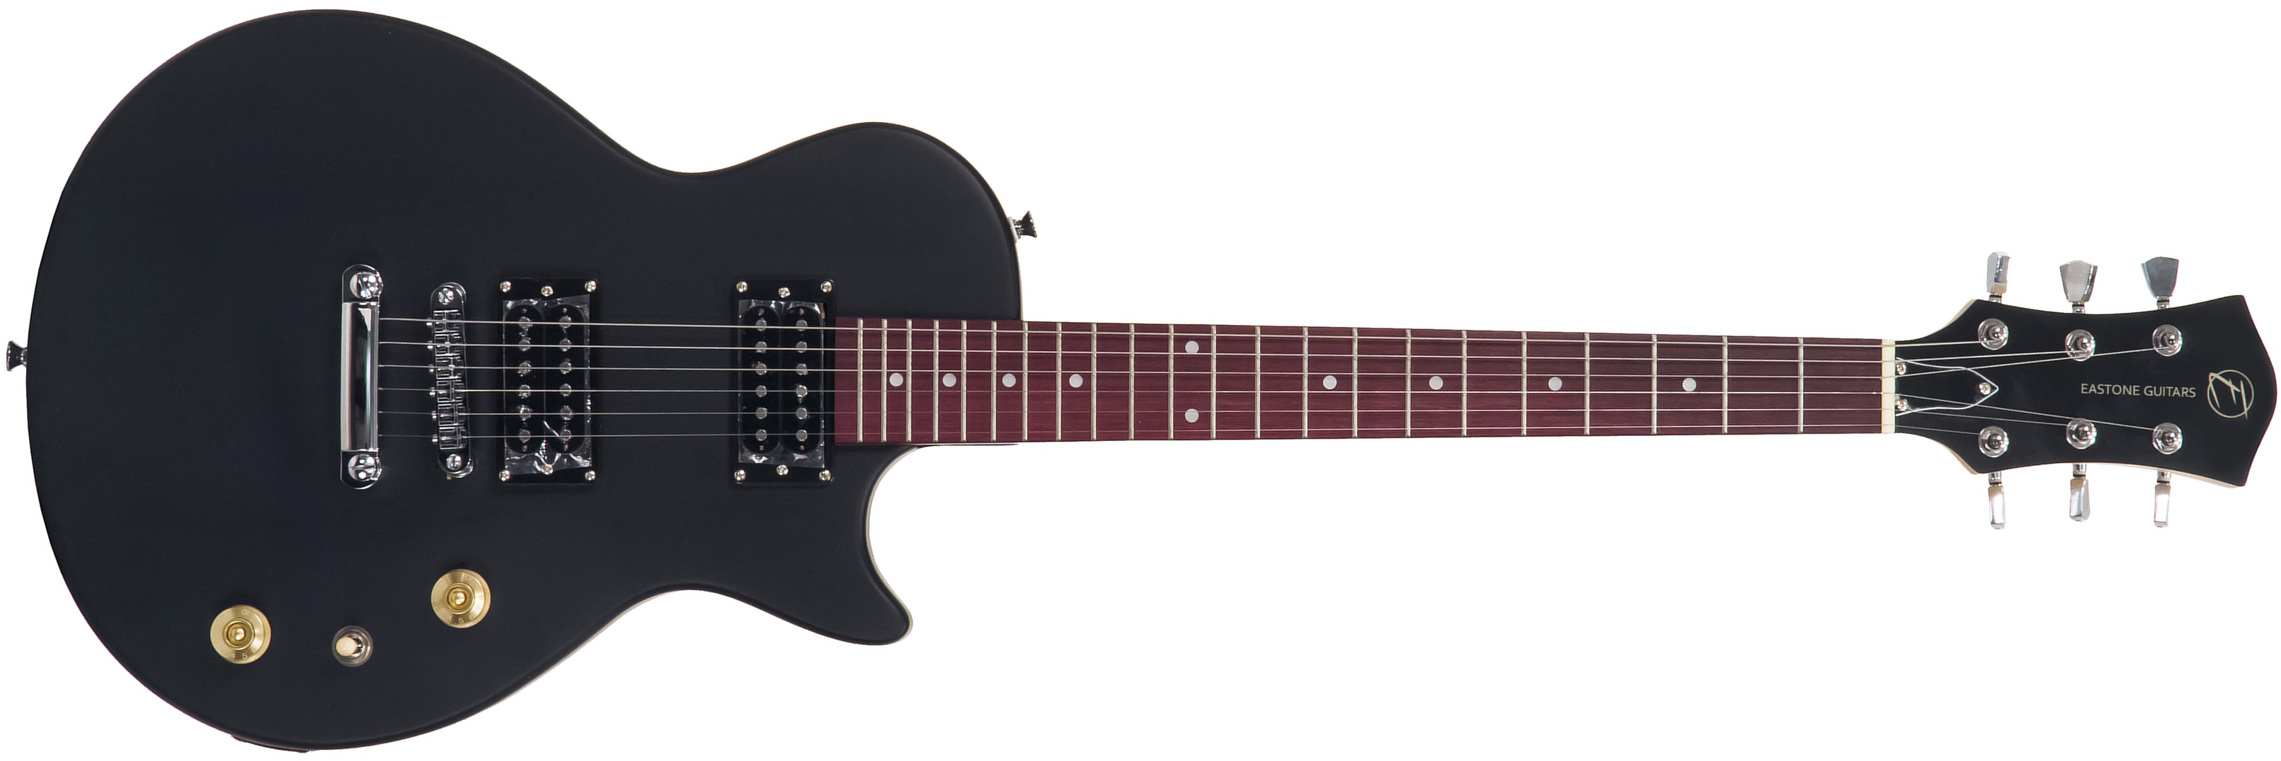 Eastone Lpl70 Hh Ht Pur - Black Satin - Enkel gesneden elektrische gitaar - Main picture